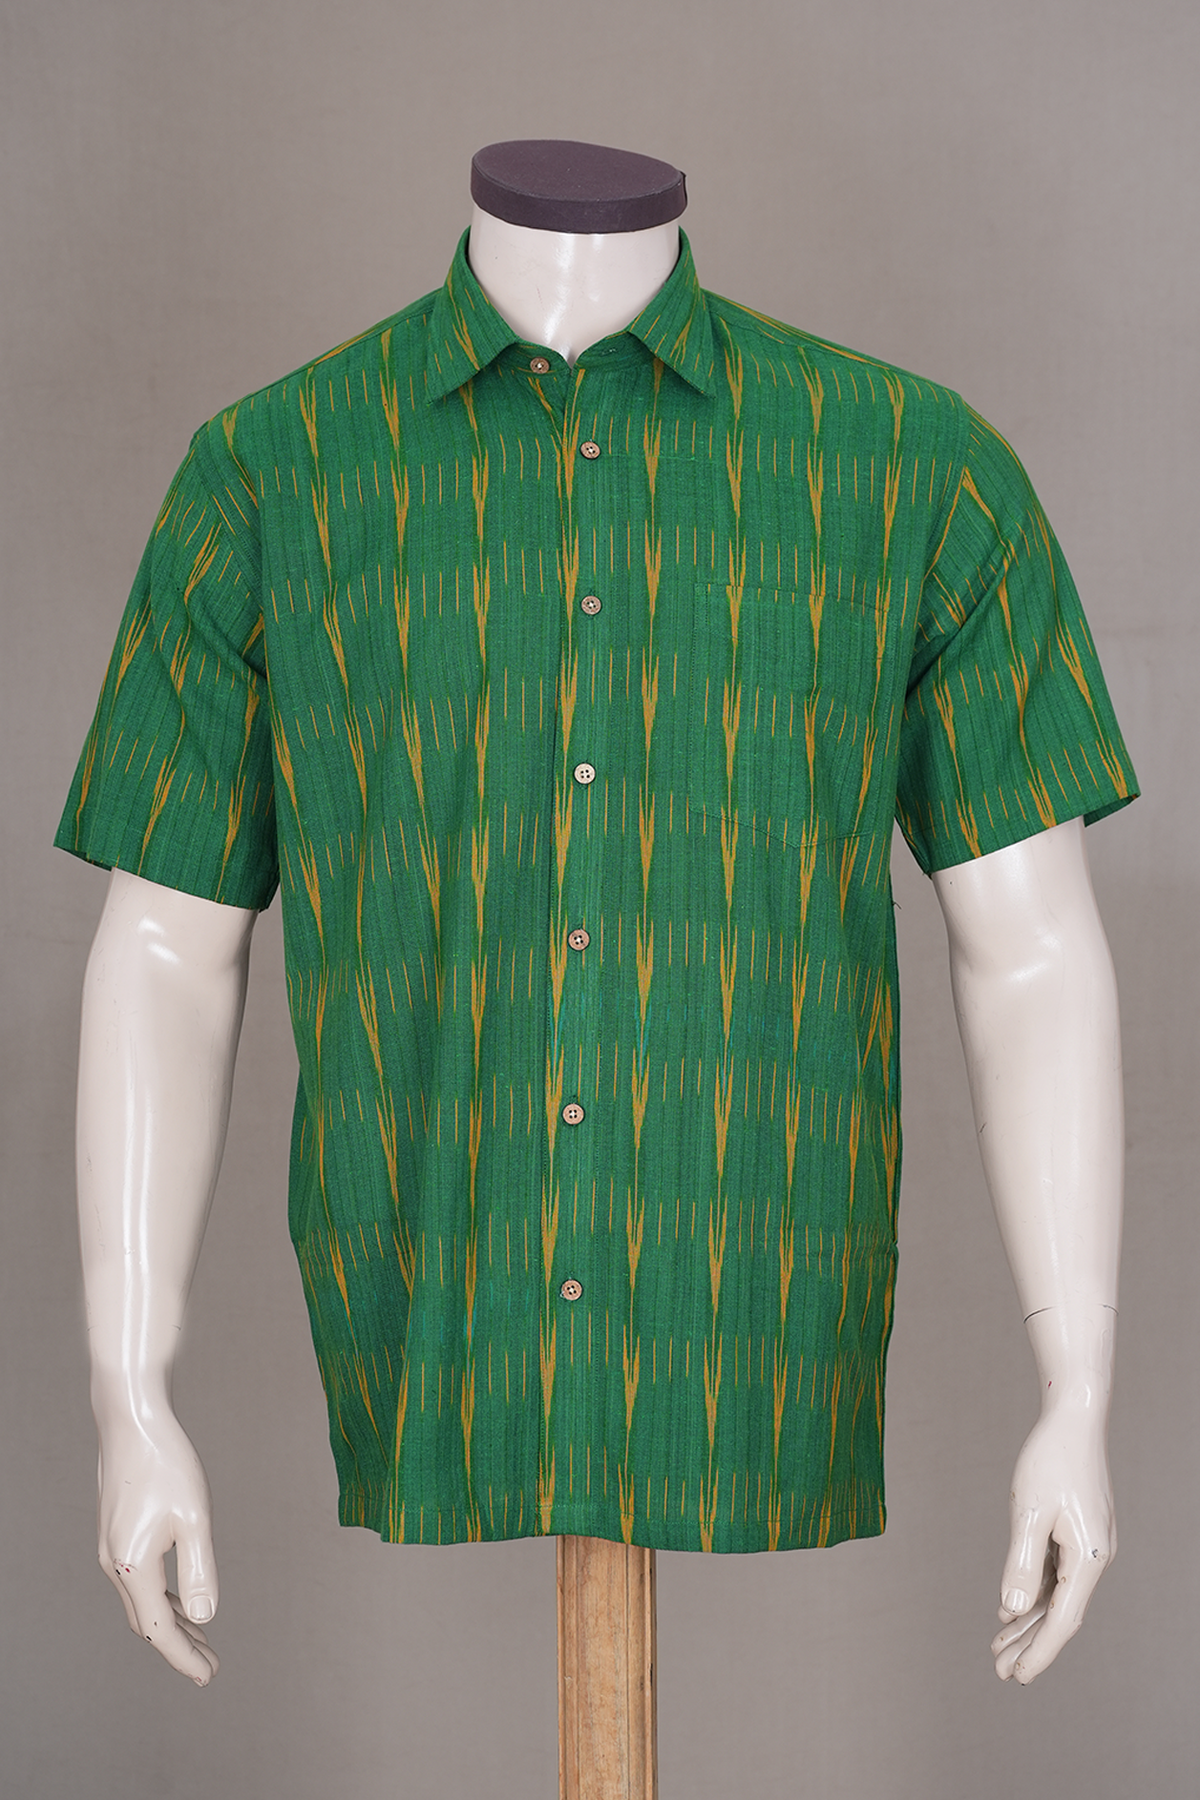 Regular Collar Stripes Design Bold Green Ikat Cotton Shirt